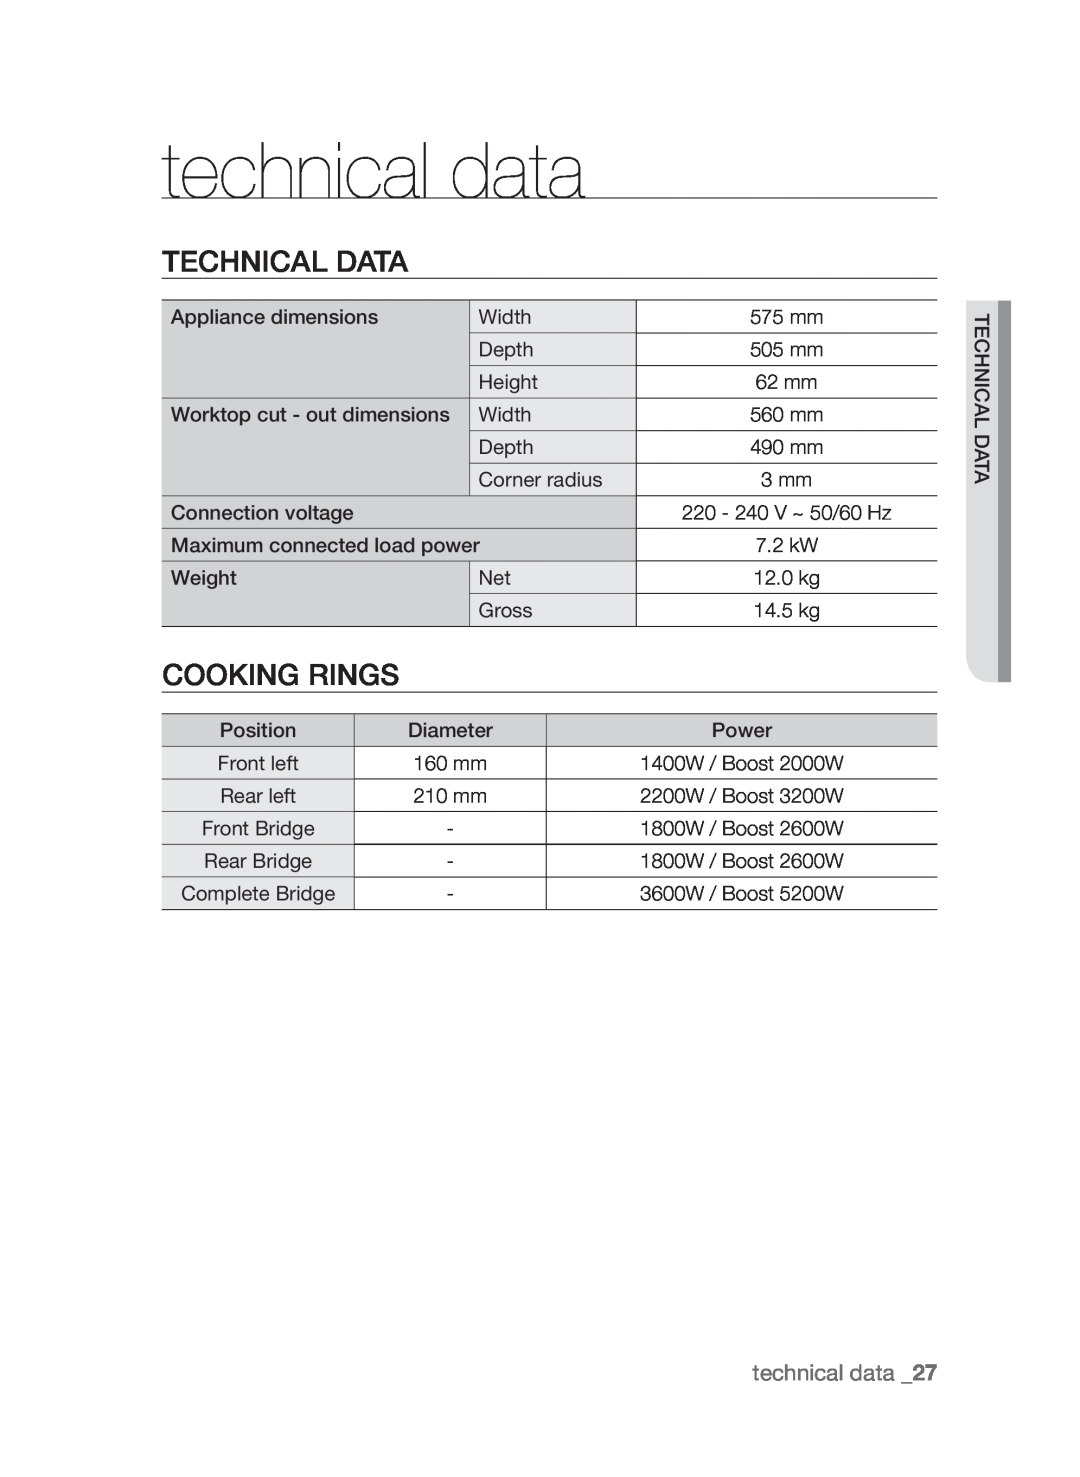 Samsung CTI613GI user manual technical data, Technical data, Cooking rings 